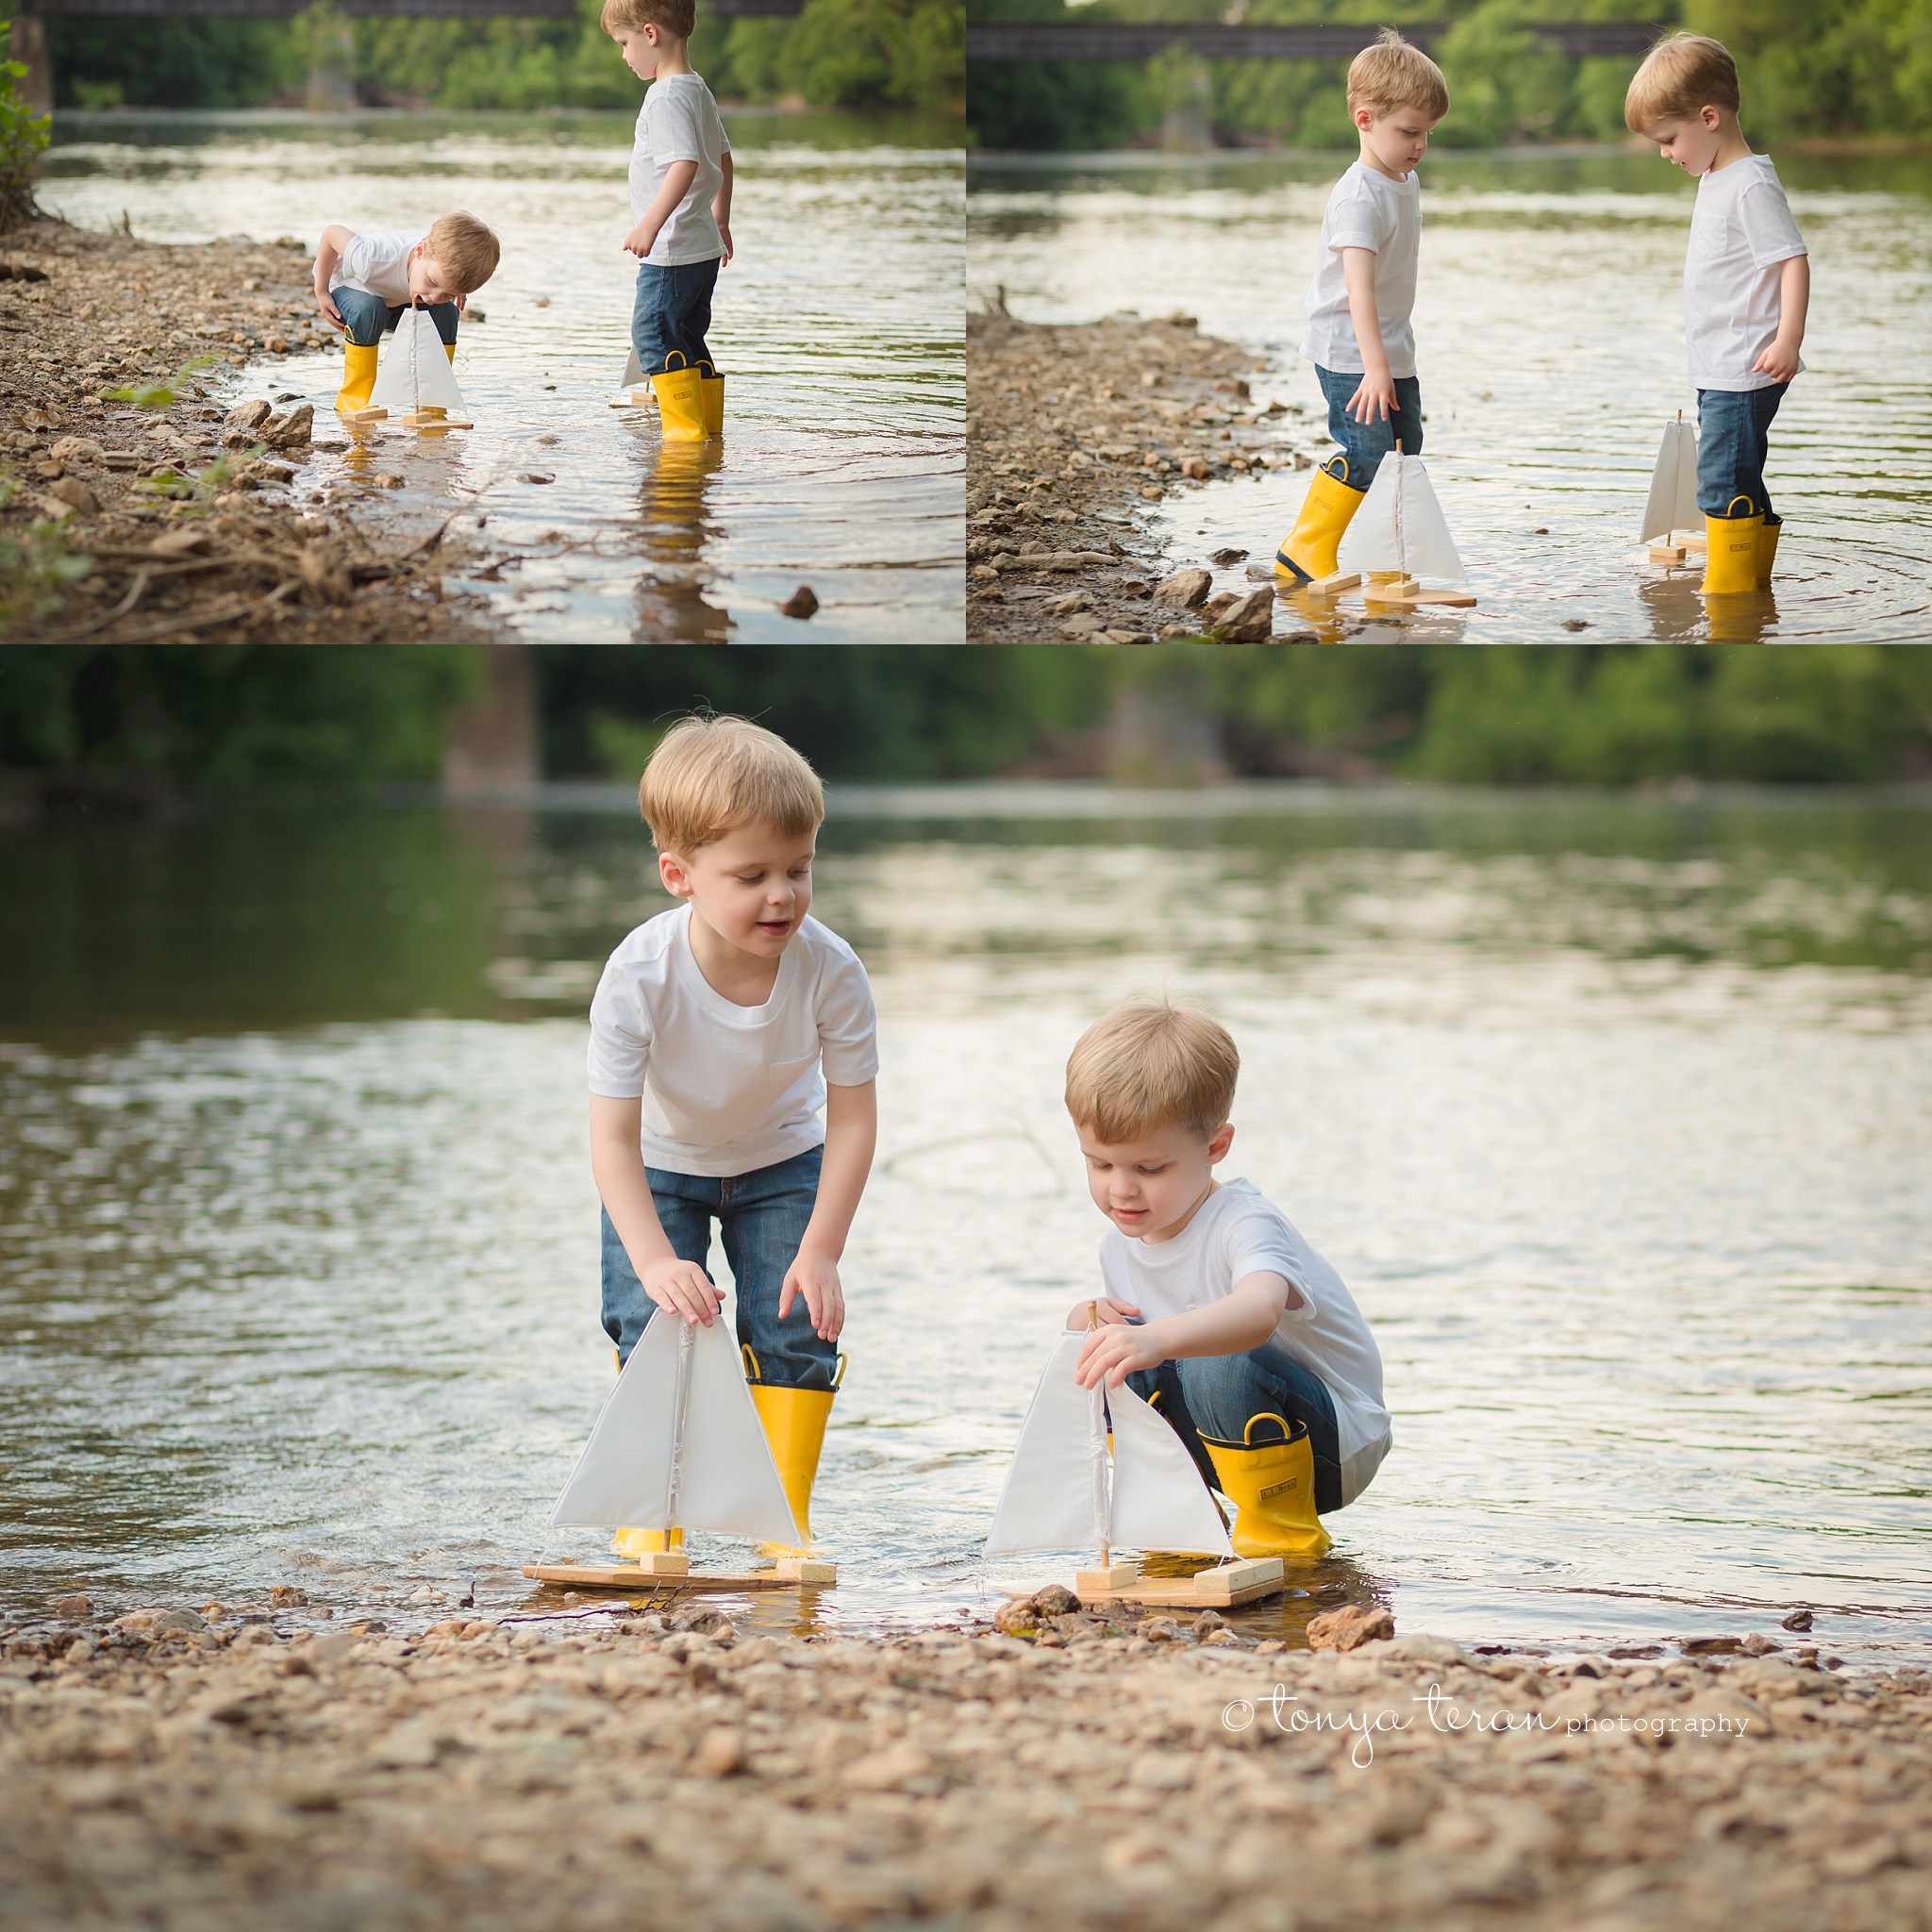 Twin boys Photo Session | Tonya Teran Photography, Bethesda, MD Newborn, Baby, and Family Photographer